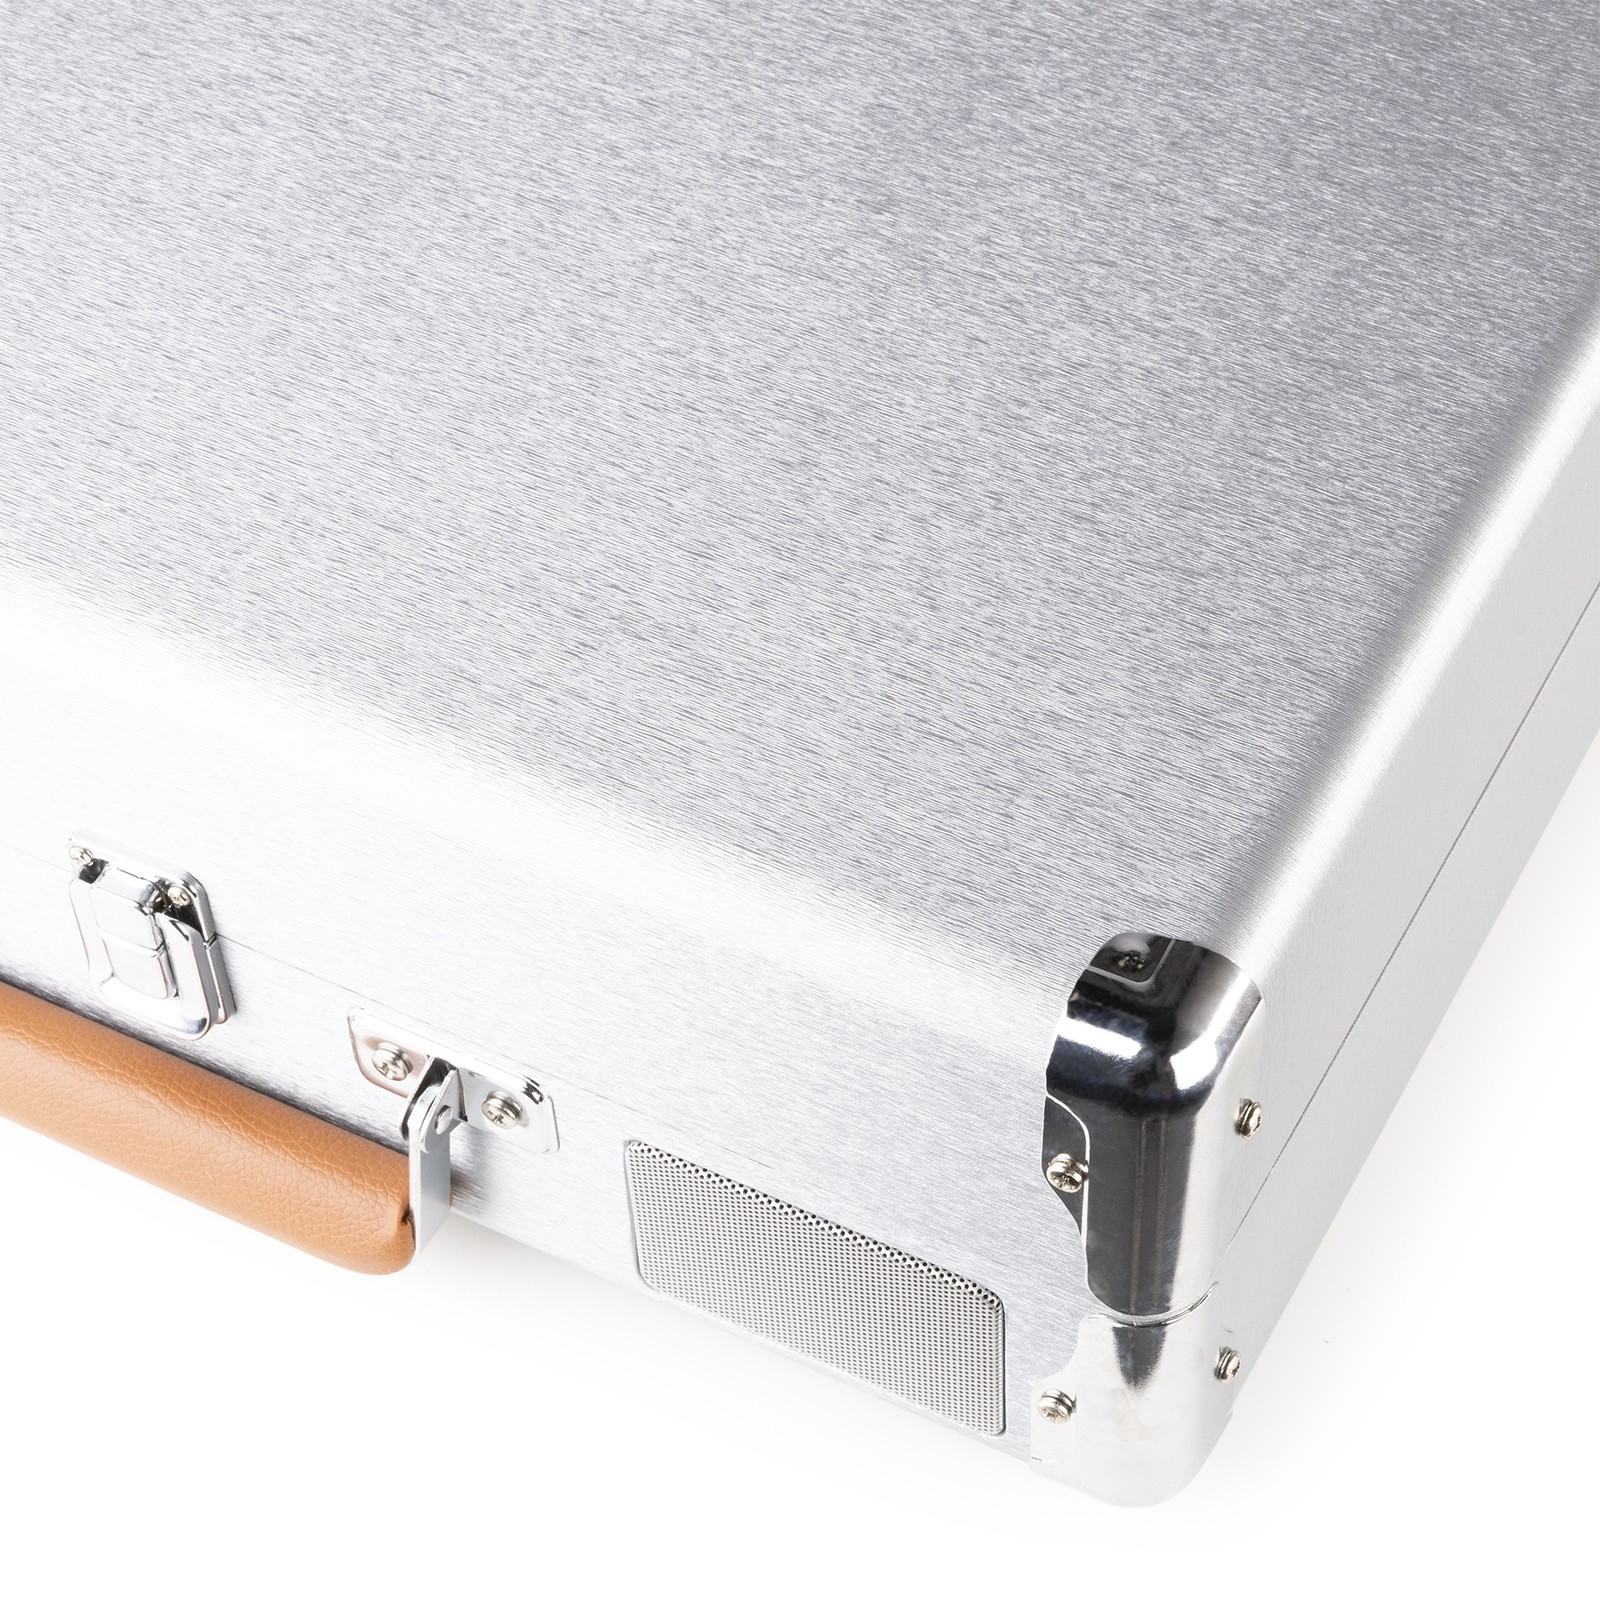 AUDIZIO RP320 Πικάπ με Ηχεία, Bluetooth, AUX και USB Recording σε Αλουμινίου βαλίτσα 102.176